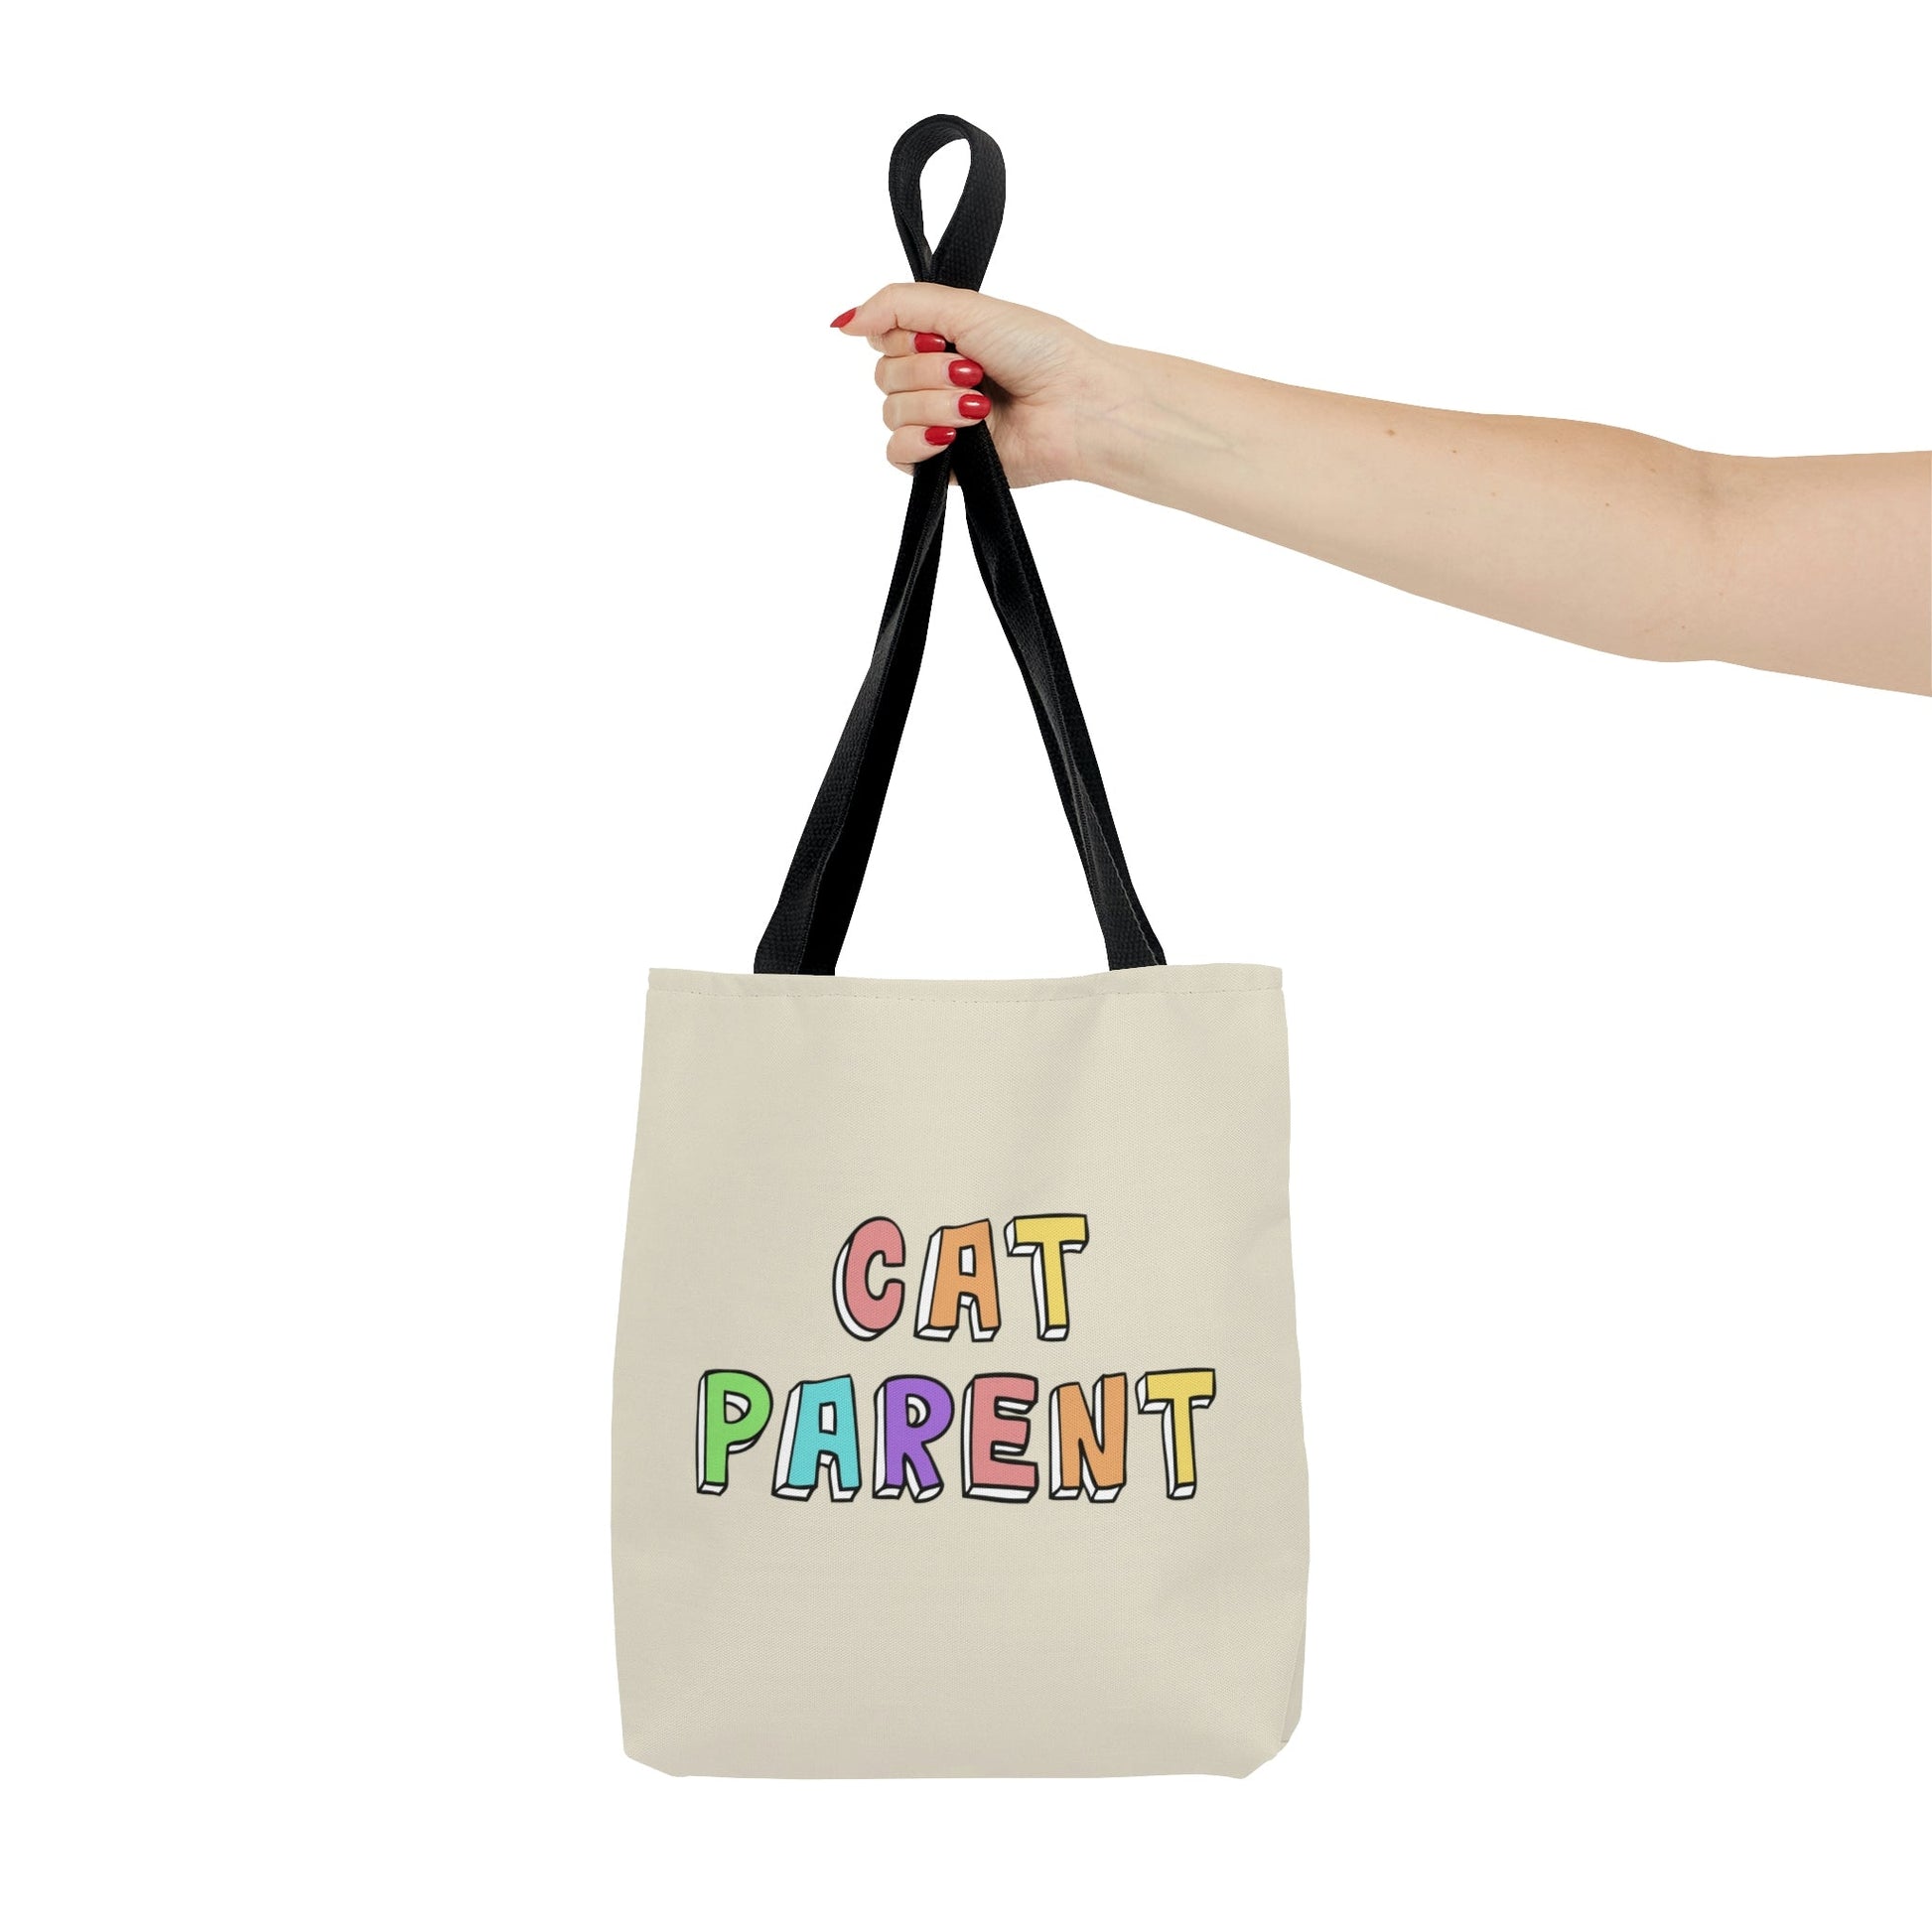 Cat Parent | Tote Bag - Detezi Designs-29433676010975447758